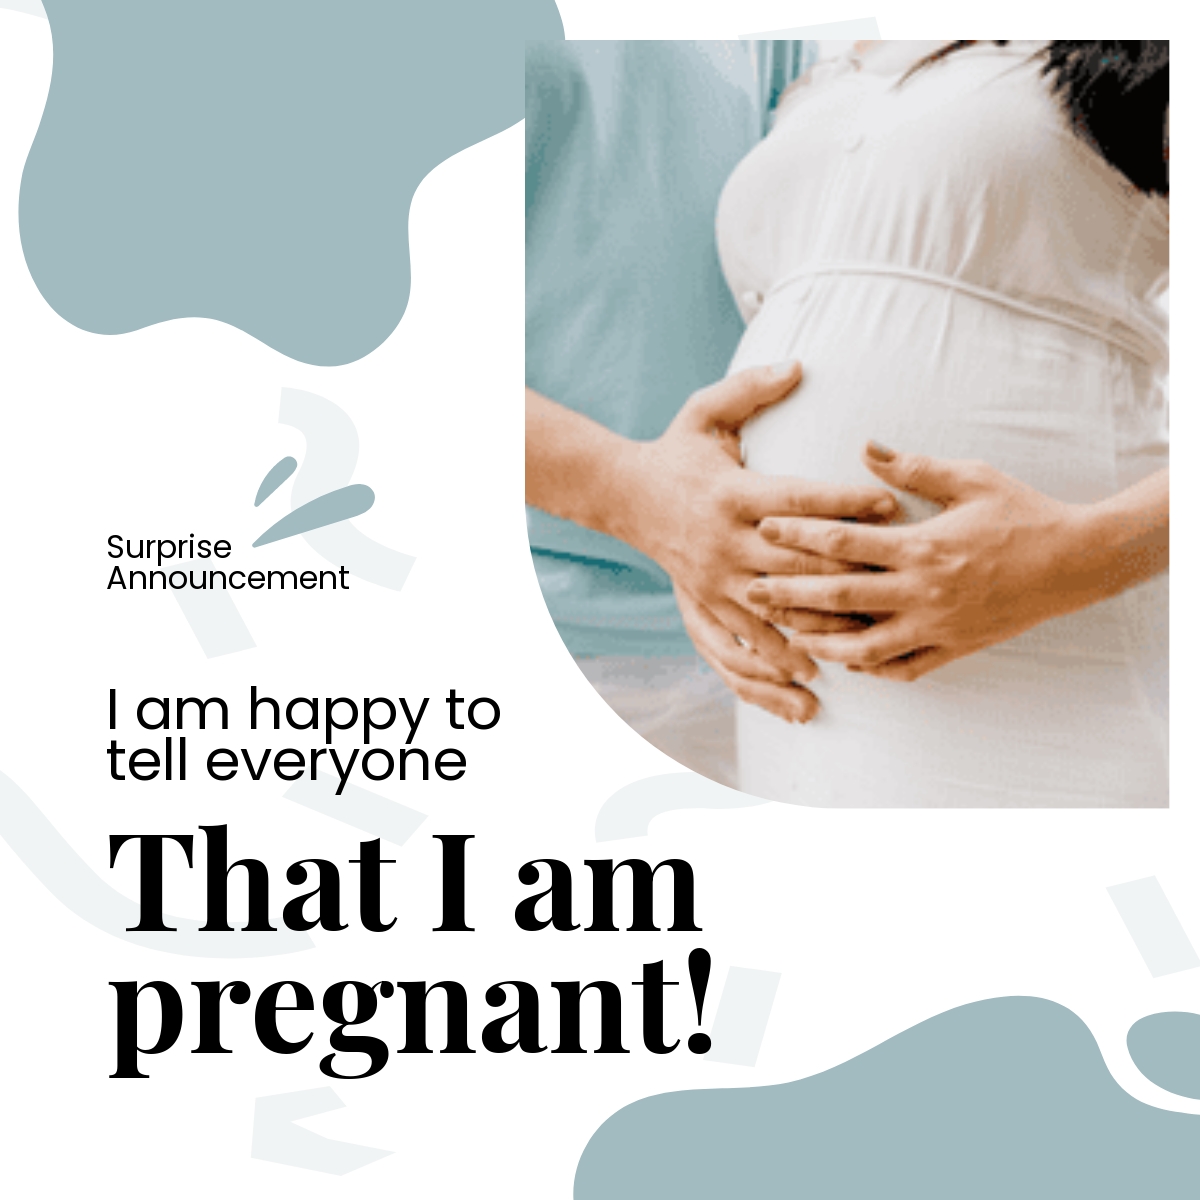 Surprise Pregnancy Announcement Linkedin Post Template